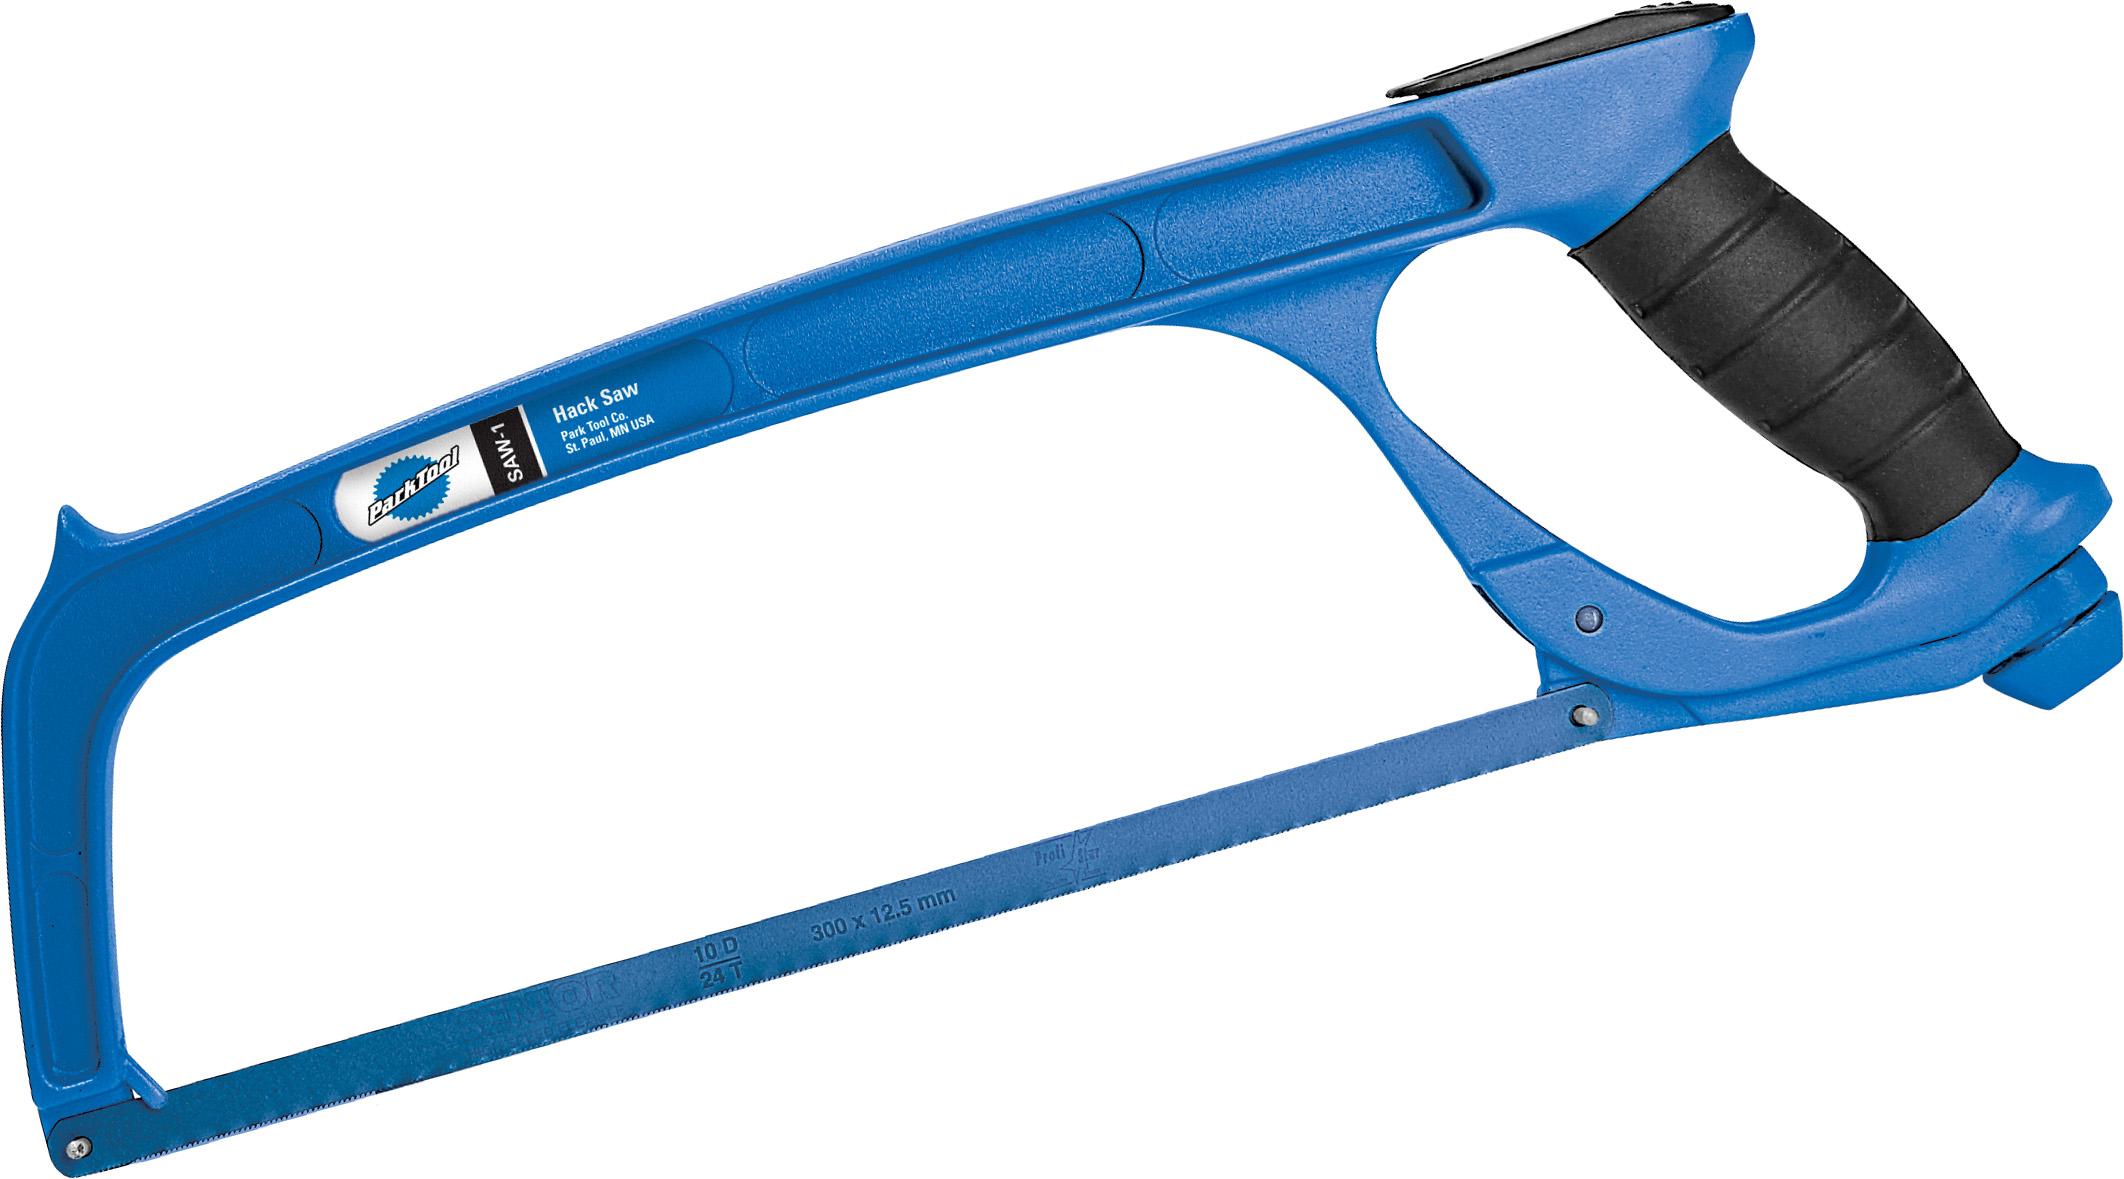 Park Tool Hacksaw Saw-1 - Blue